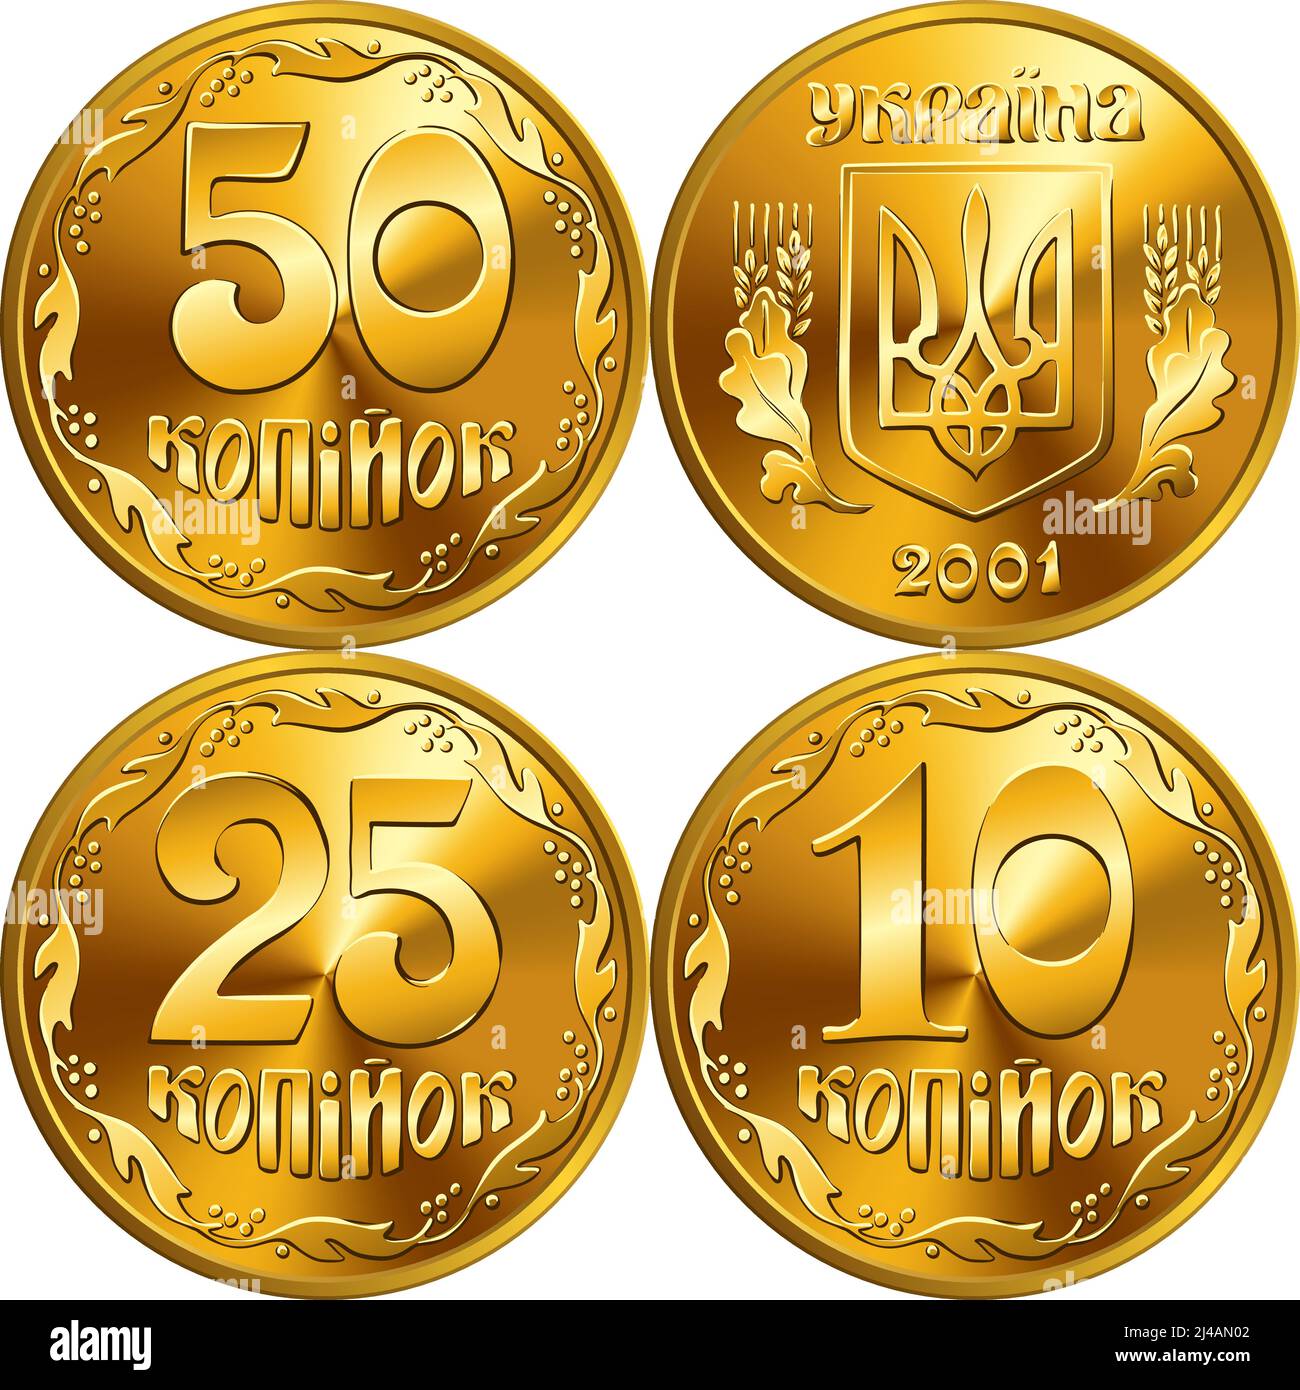 Set of krainian money gold coins 50, 25, 10 kopiyok, obverse and reverse Stock Vector